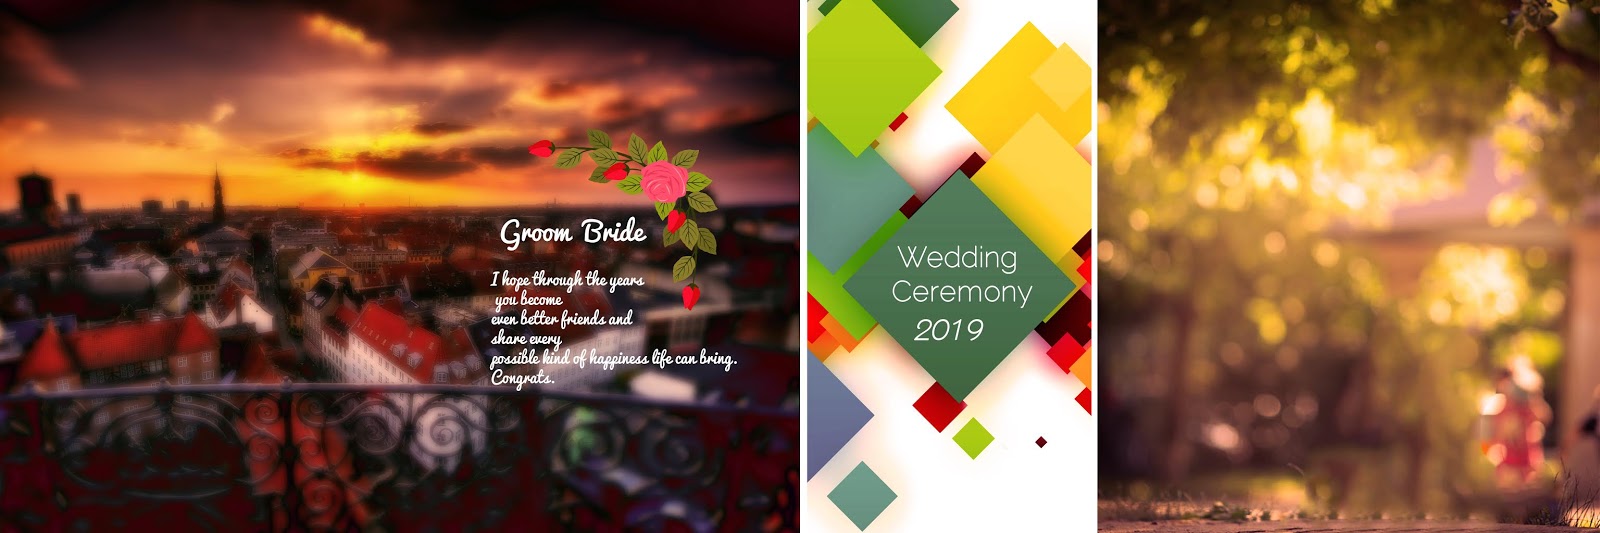 Creative Wedding Album Background 2019: 12x36 Wedding Album Background, Psd File Free Download Vol 1